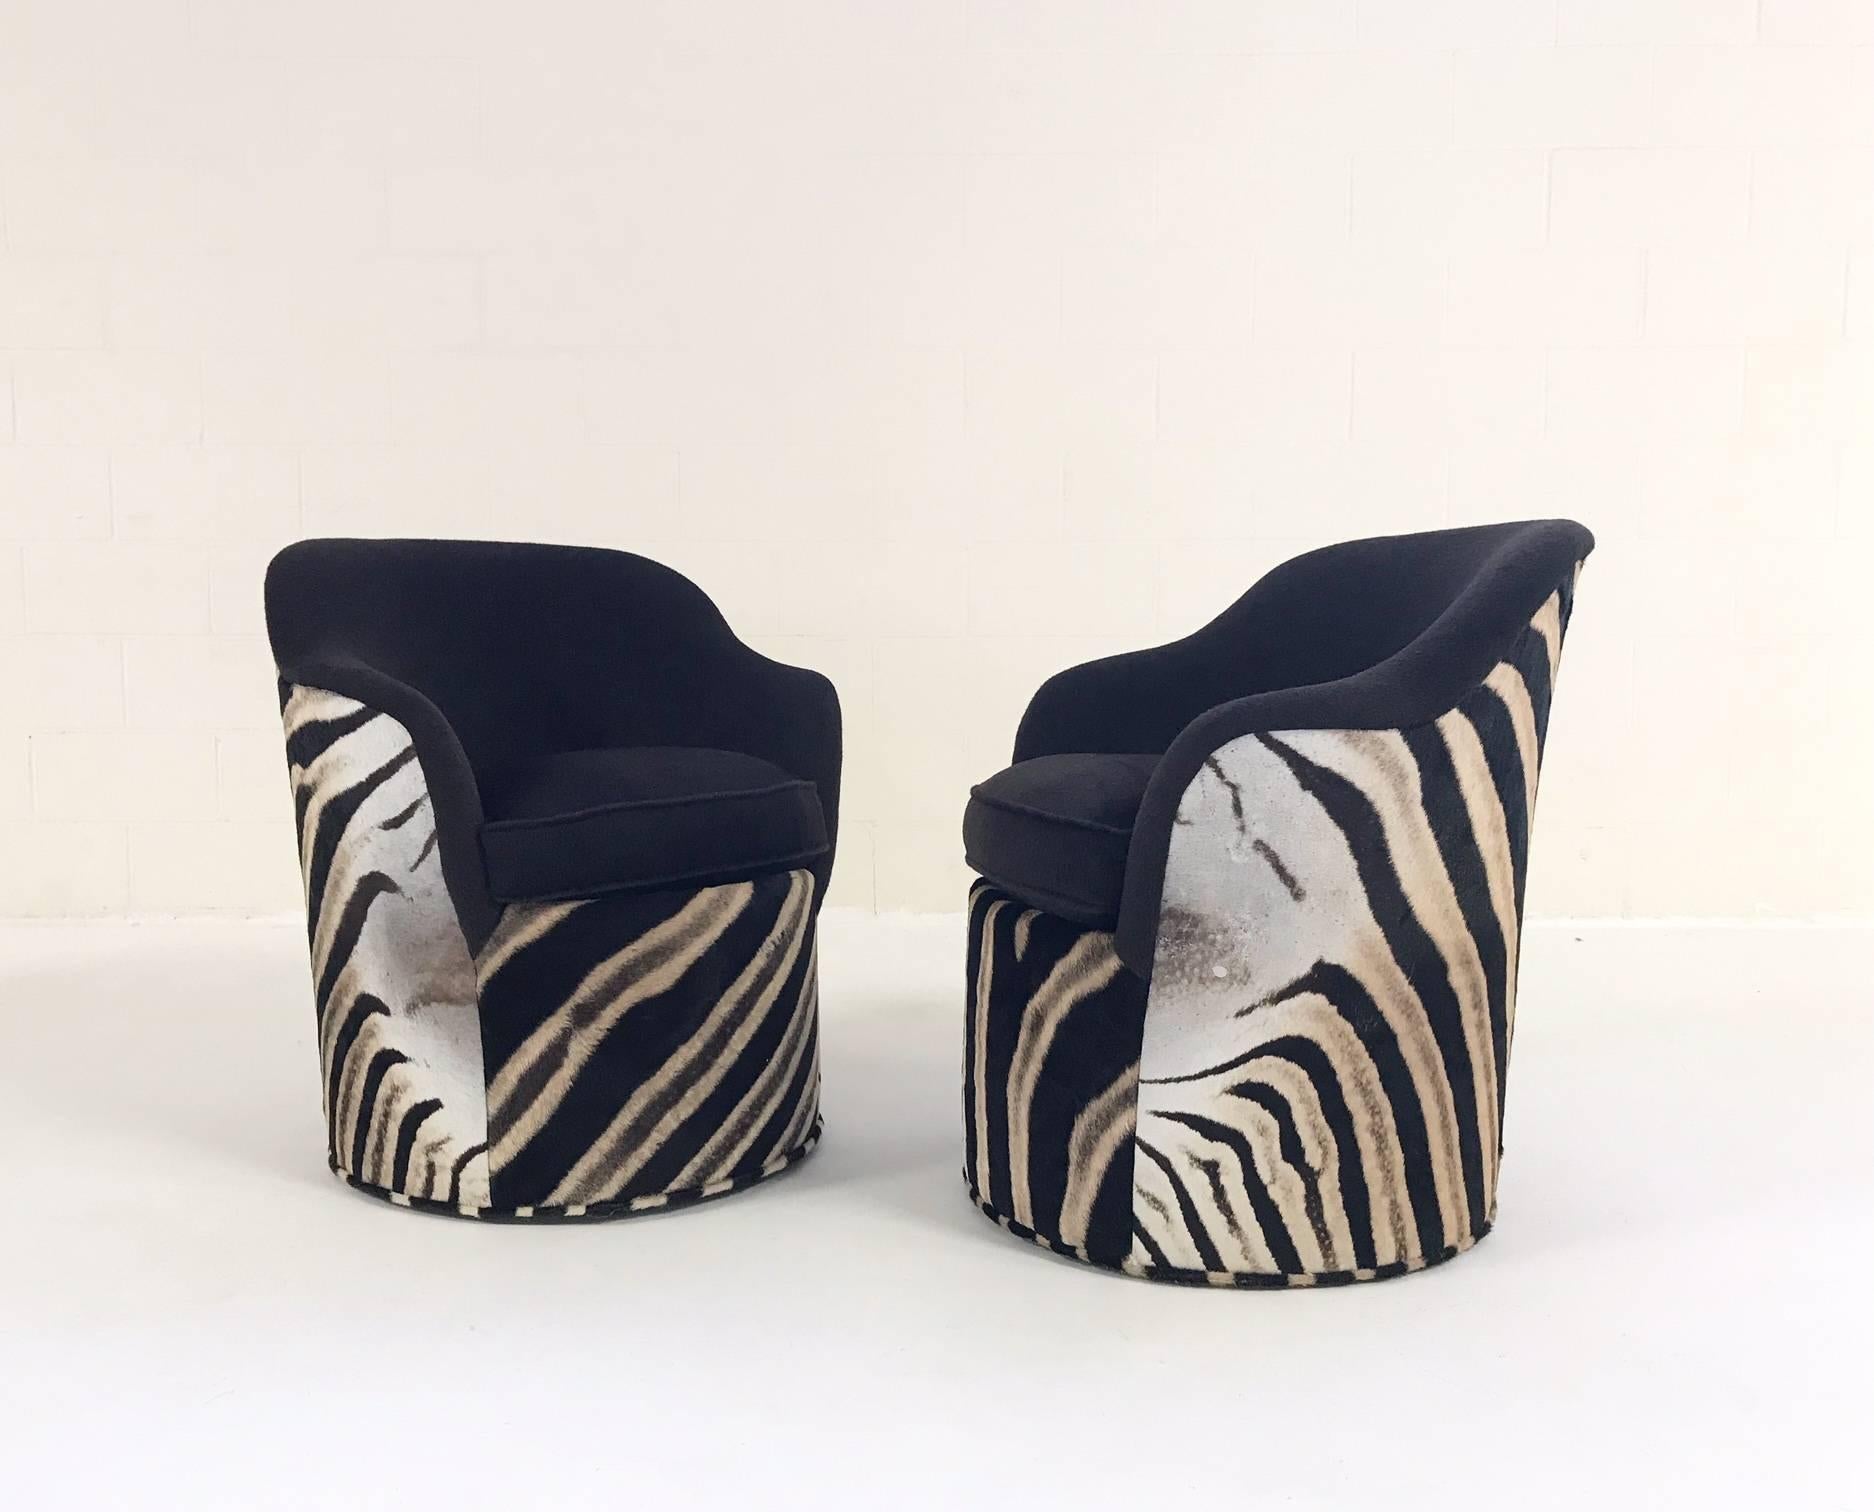 John Saladino for Dunbar Petal Chairs in Zebra and Alpaca Wool - Pair 3